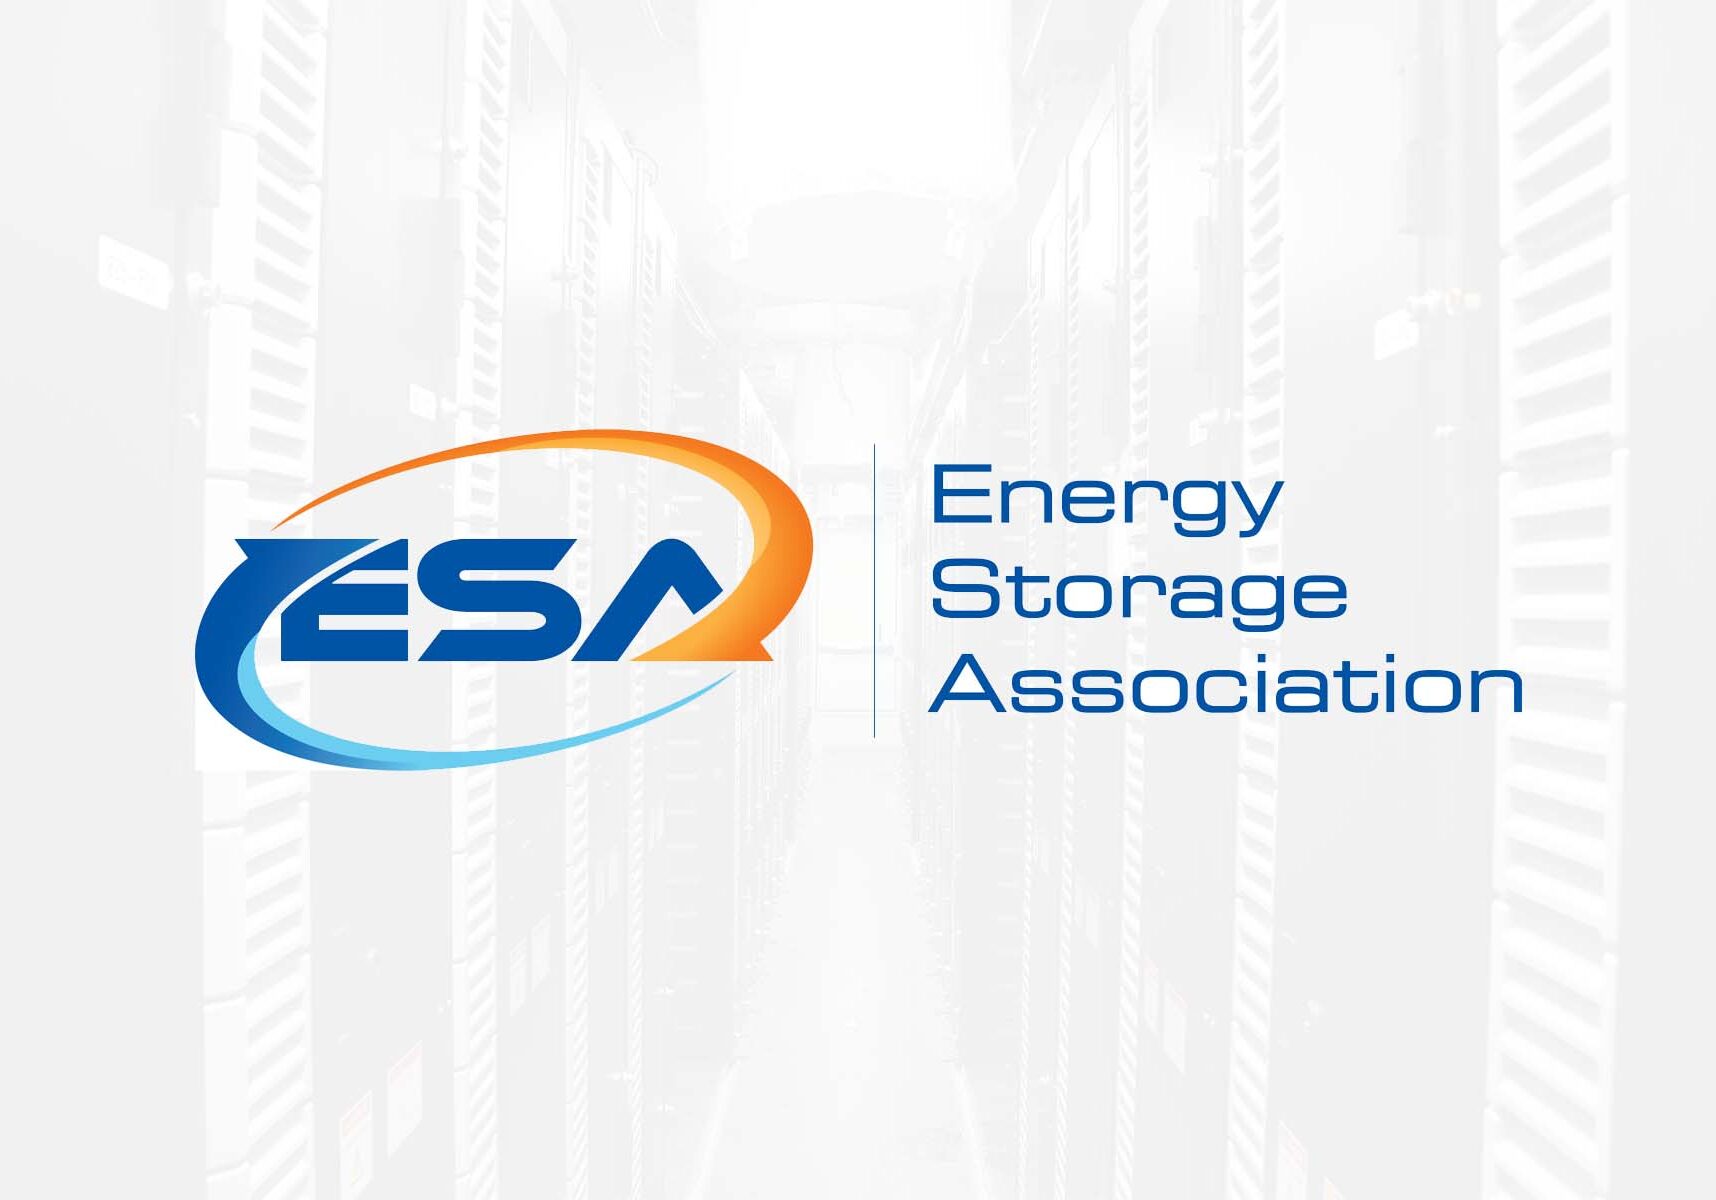 Energy Storage Association logo.